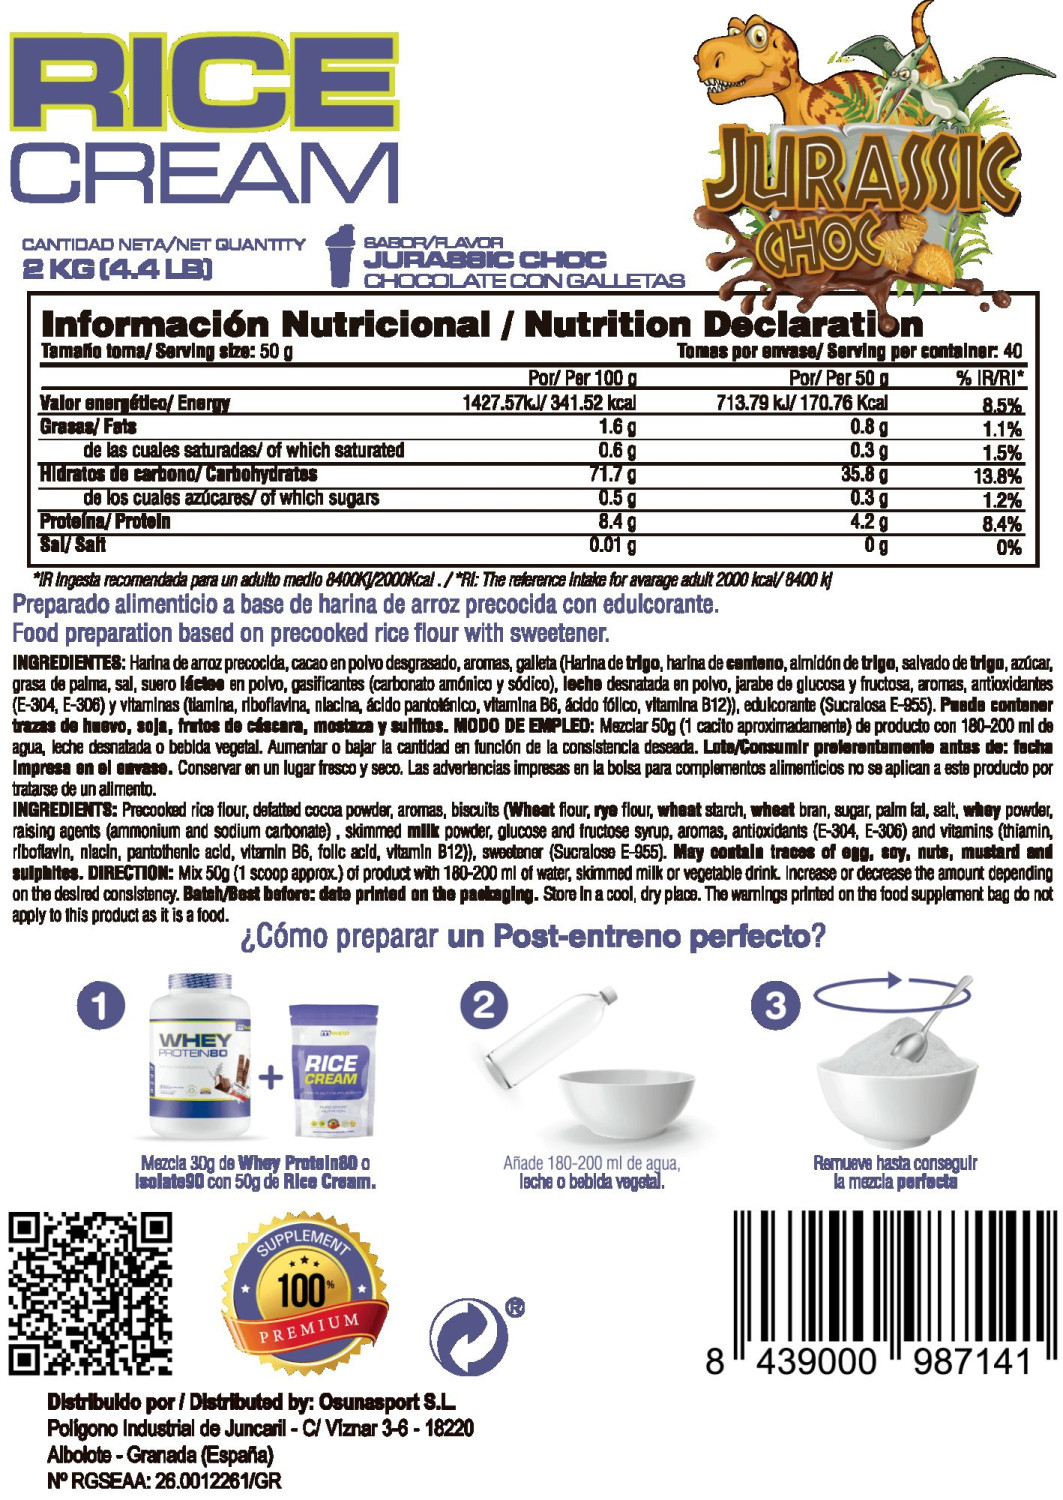 Rice Cream (crema De Arroz Precocida) - 2kg De Mm Supplements Sabor Jurassic Choc  MKP